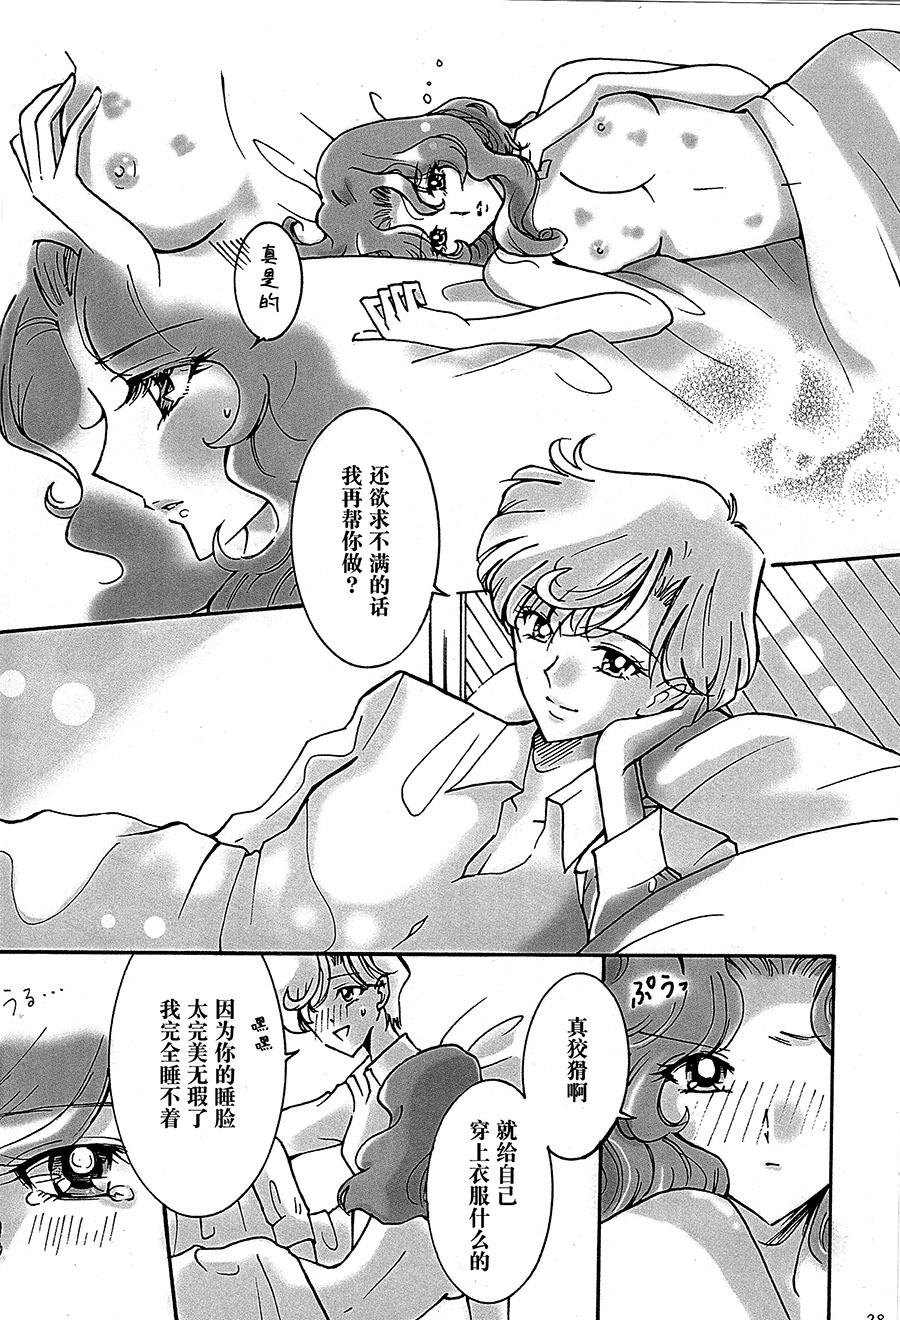 Ligaya(C94) [渋谷BRAND (白鳥神威)](美少女戦士セーラームーン) [中国翻訳](C94) [Shibuya BRAND (Shiratori Kamui)]Ligaya &#8211; I want to stay with you at the end of the world.(Bishoujo Senshi Sailor Moon) [Chinese] [大友同好会](39页)